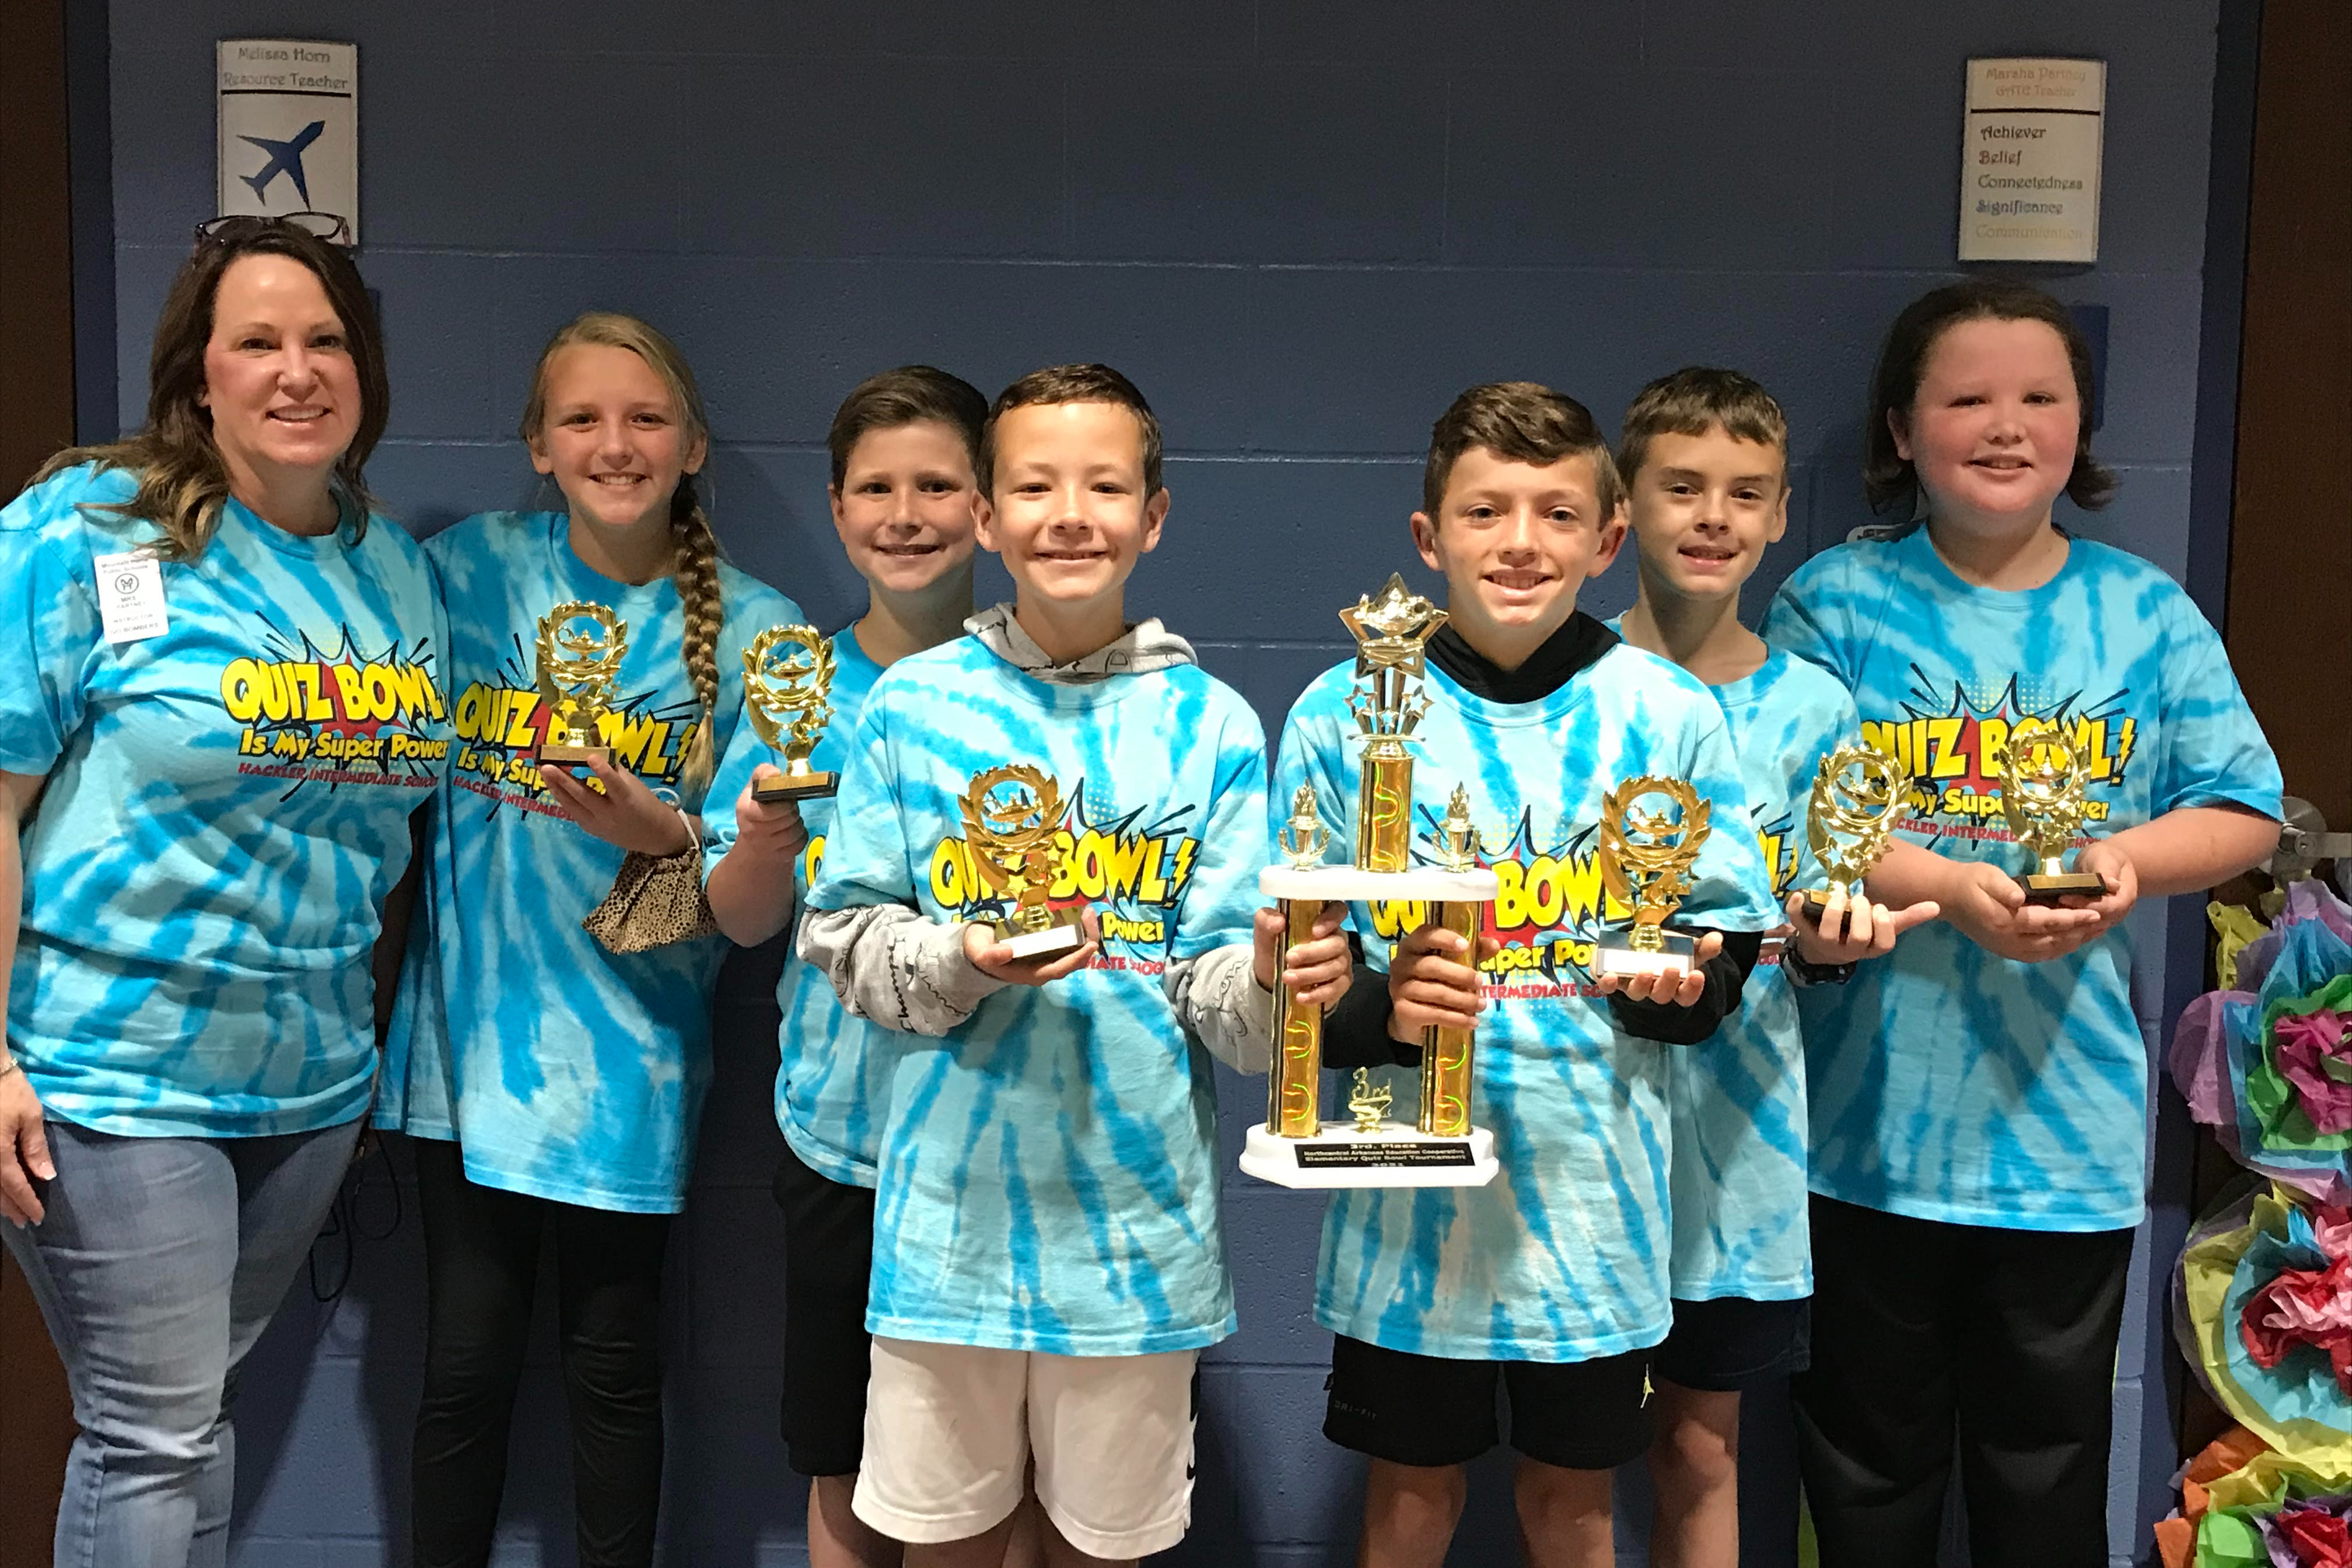 Quiz bowl team from intermediate school holding trophies. 